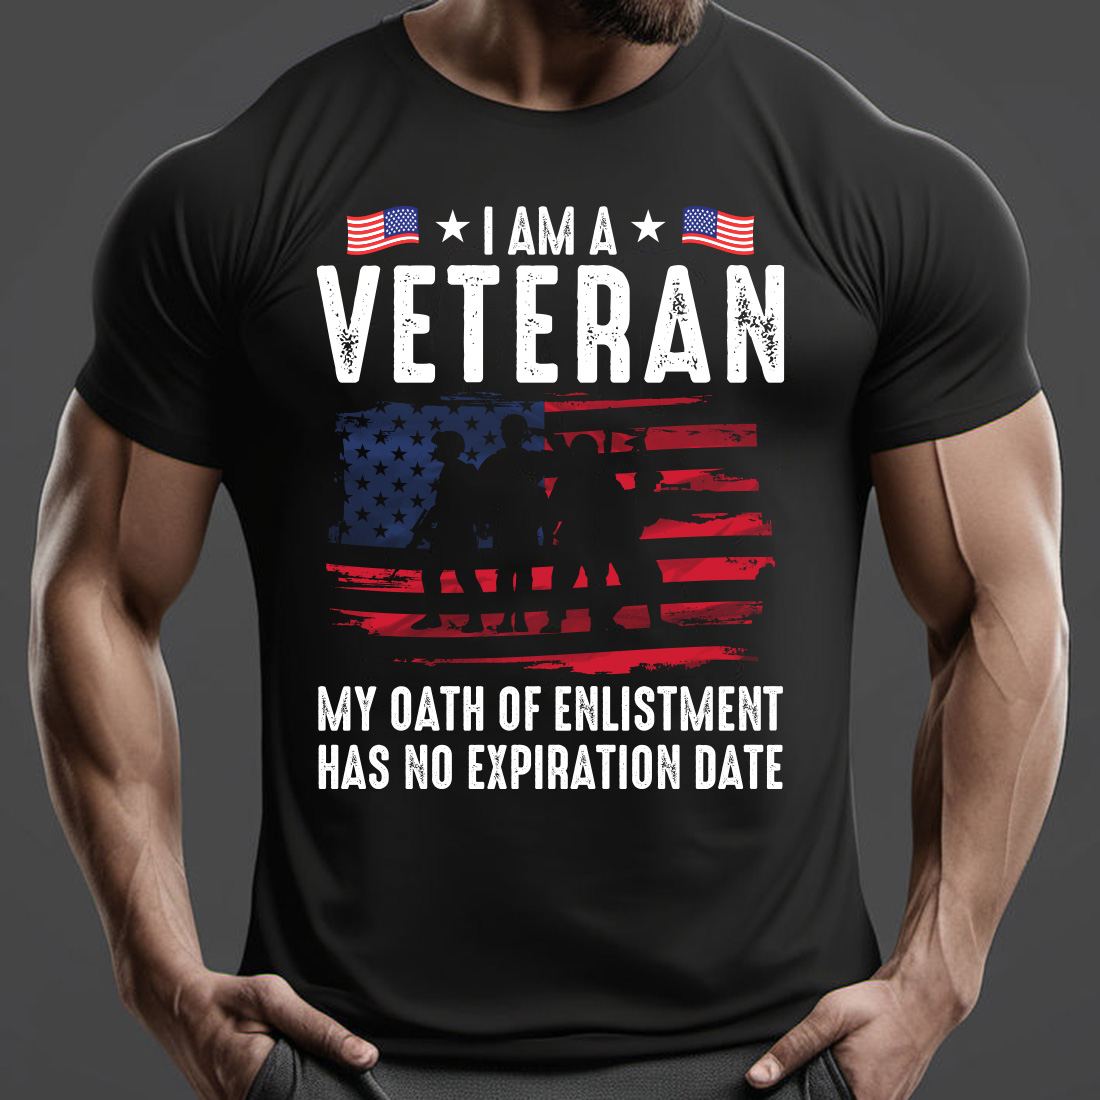 veteran day t shirt 19 450